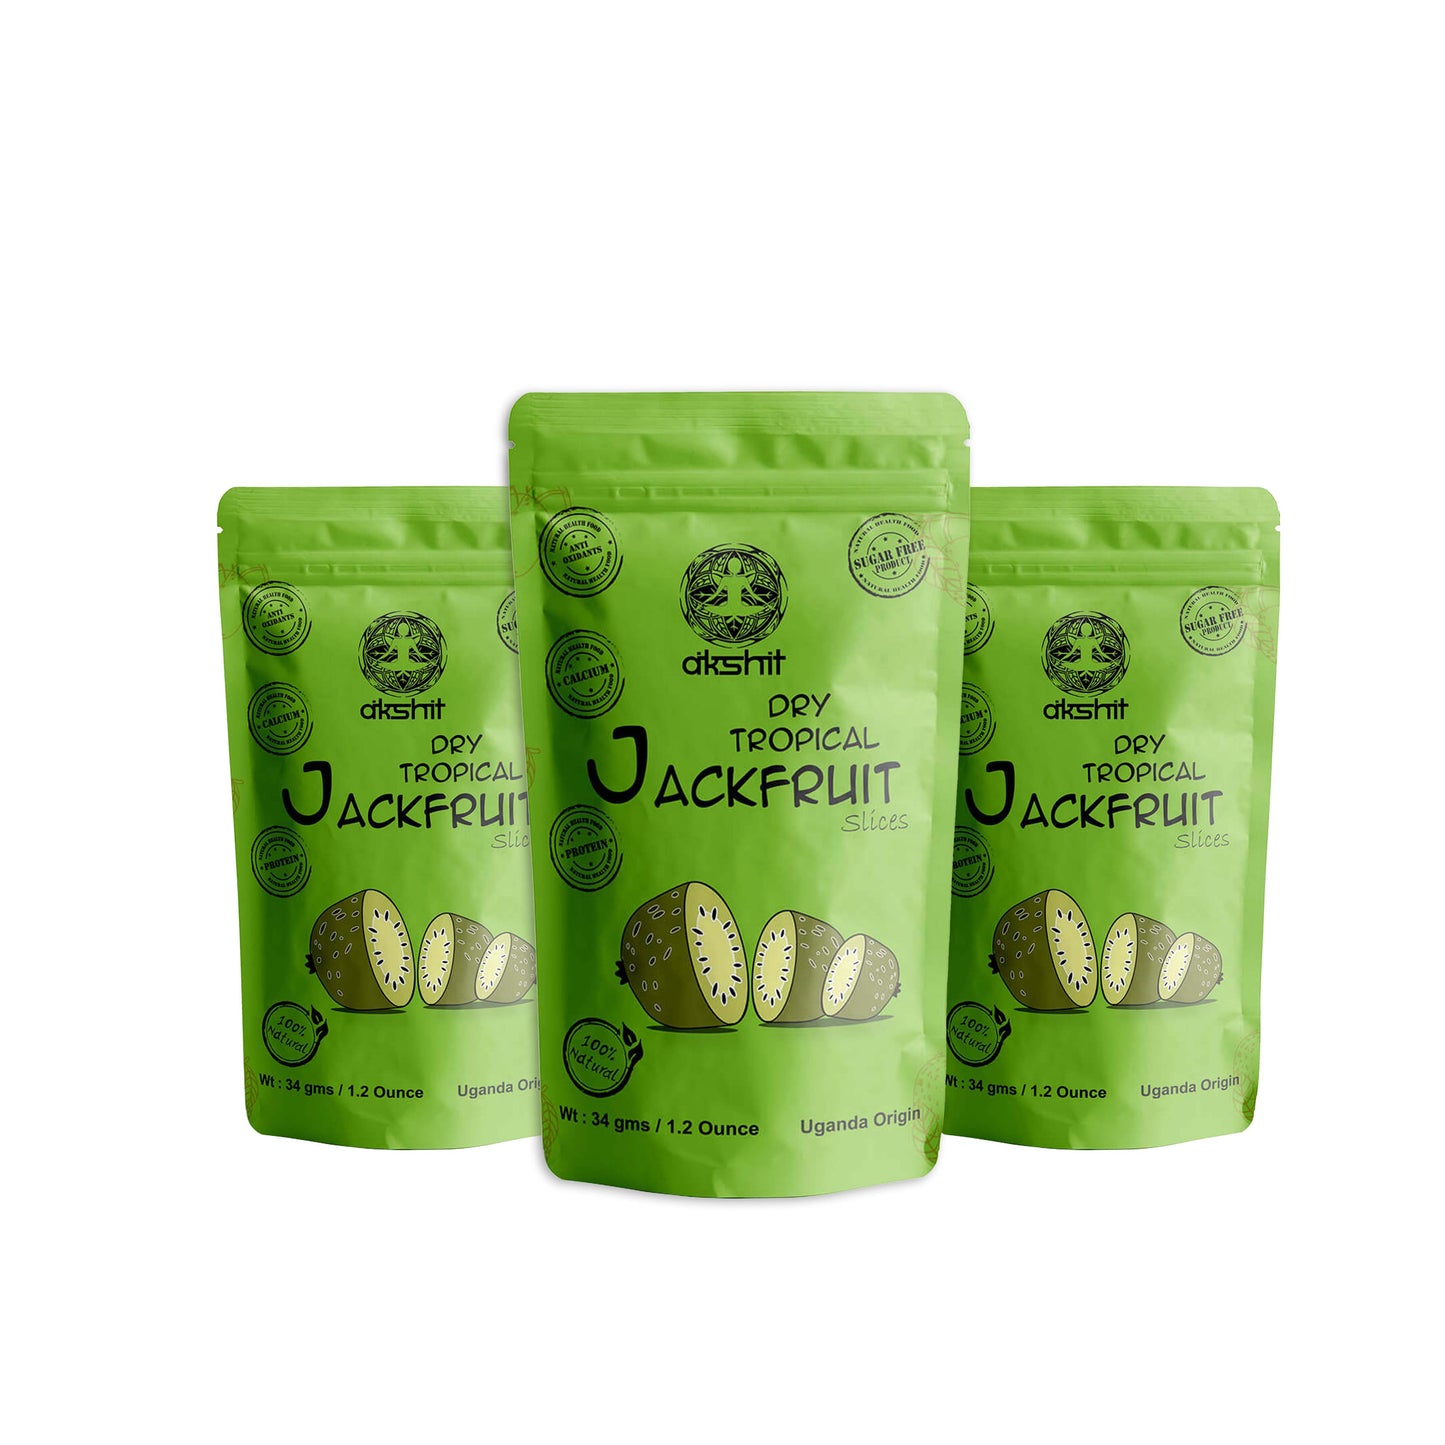 Dry tropical Jackfruit pack of 3 1.2 oz.